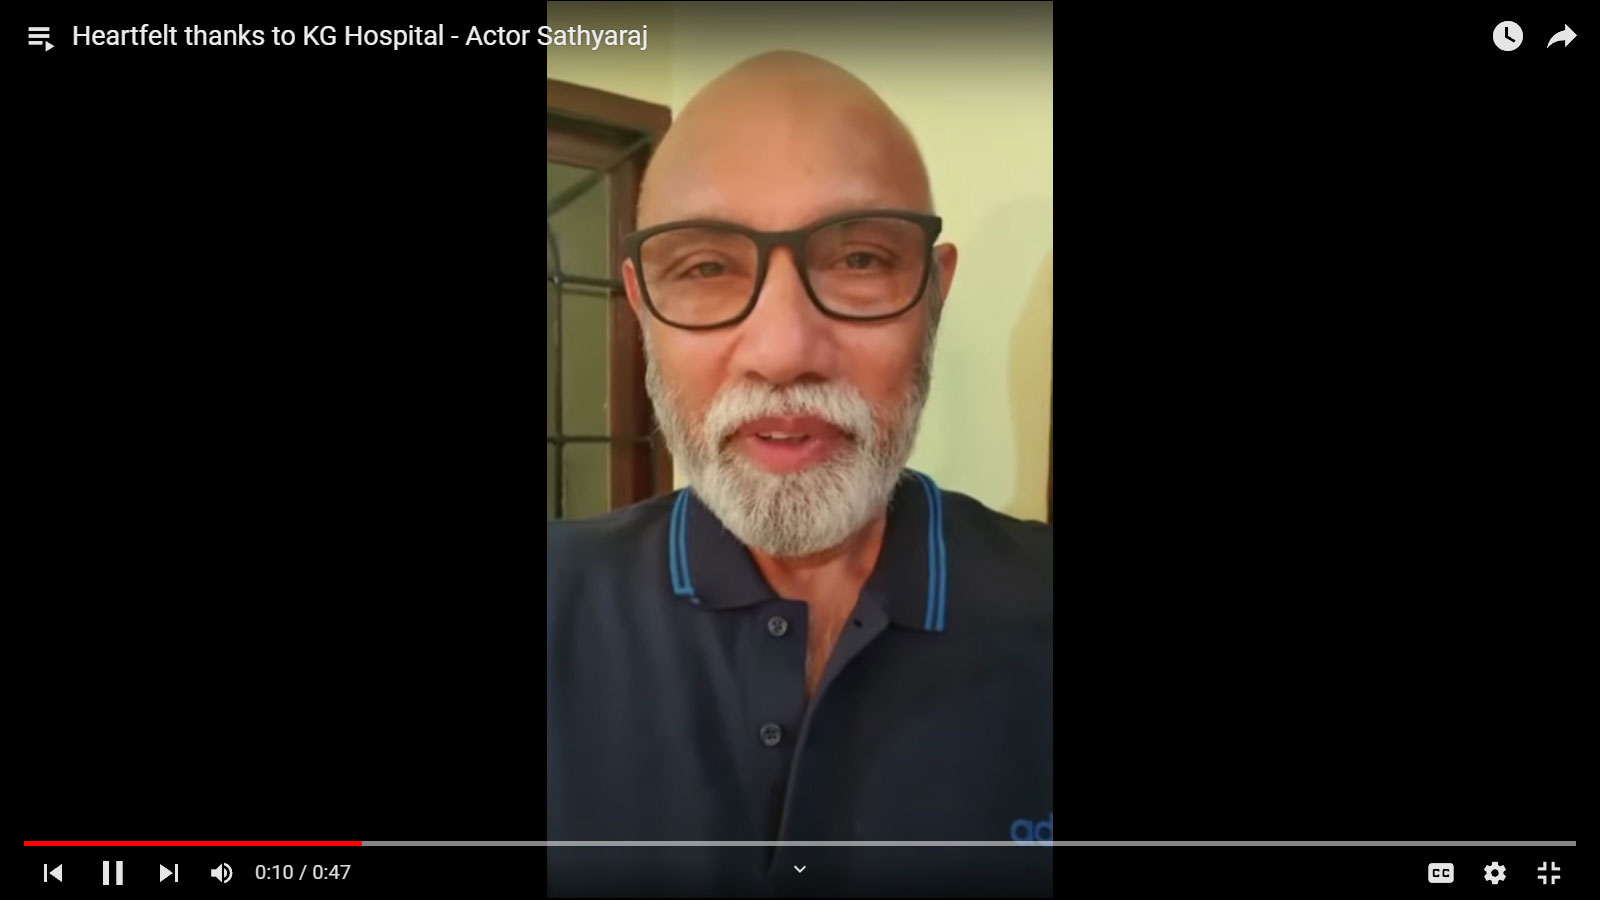 Heartfelt thanks to KG Hospital - Actor Sathyaraj